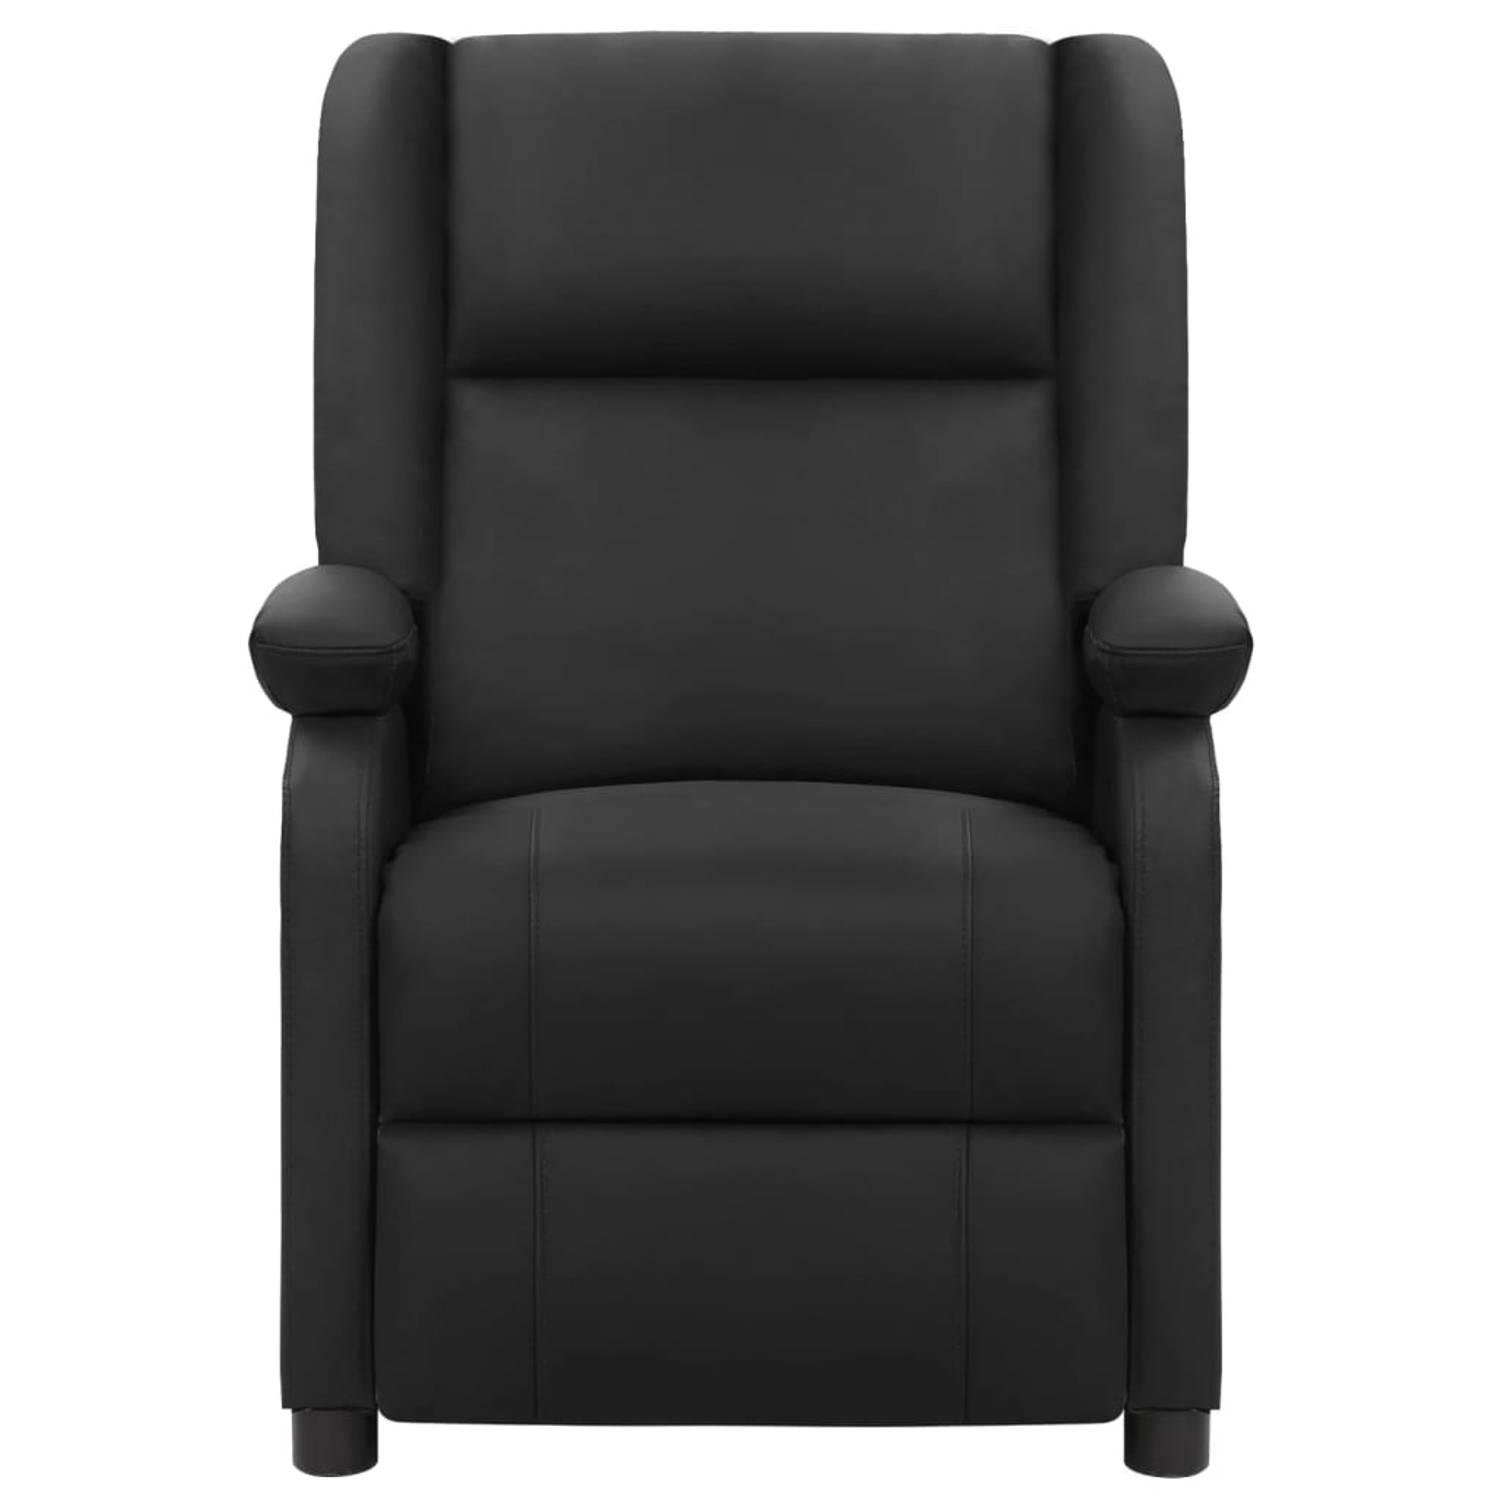 The Living Store Verstelbare fauteuil - Zwart - echt leer - 71 x 90.5 x 96 cm - Comfortabel - duurzaam